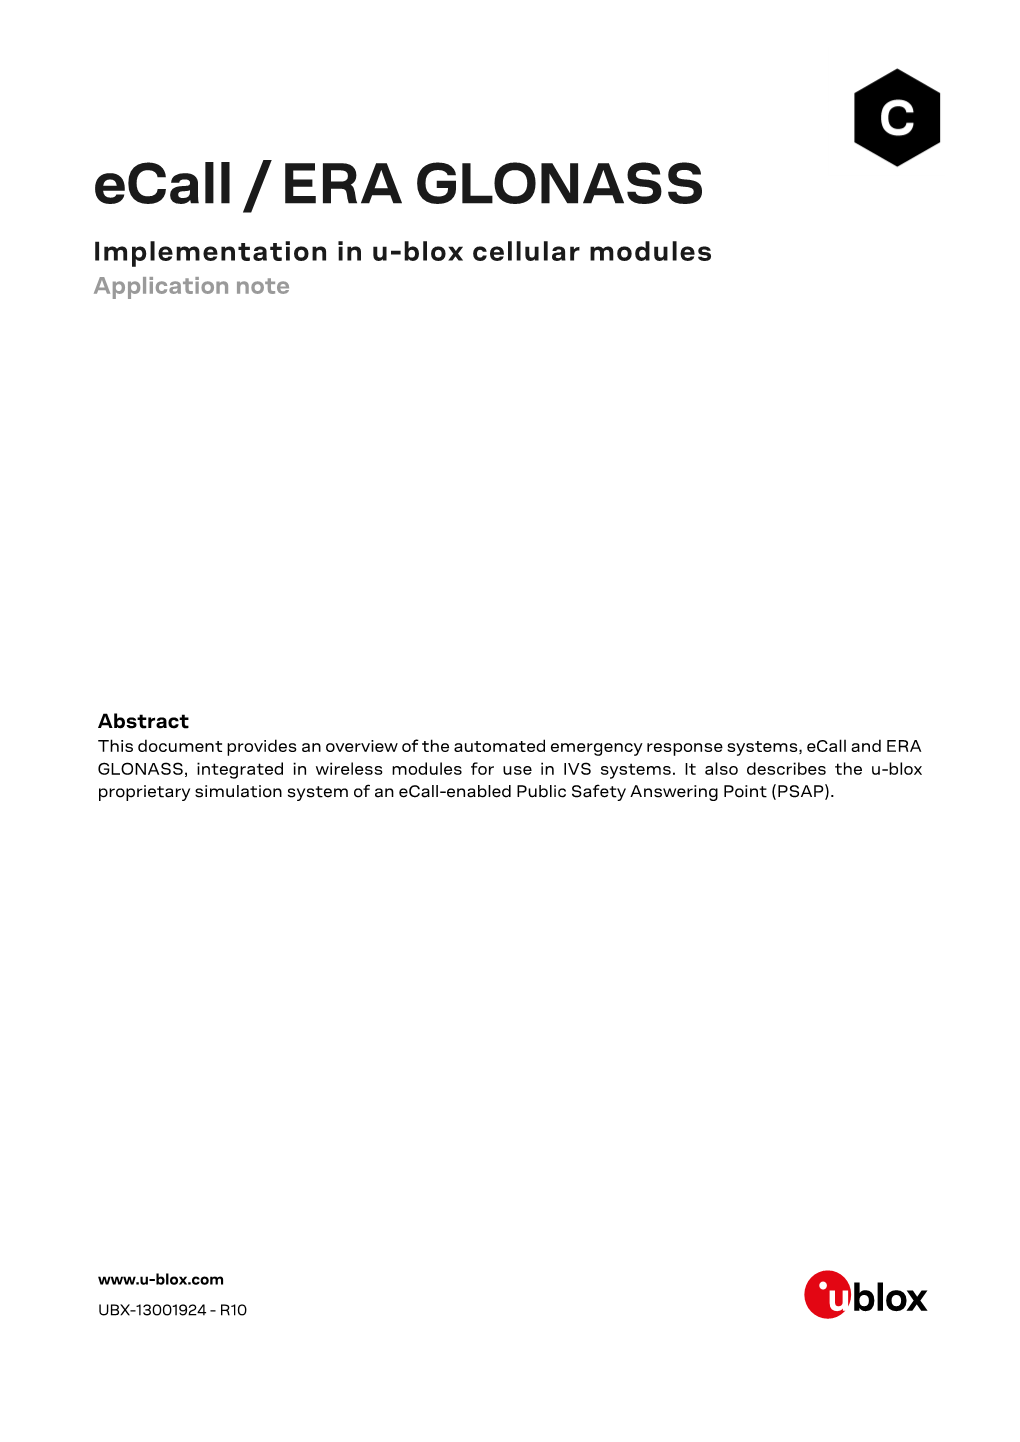 Ecall / ERA GLONASS Implementation in U-Blox Cellular Modules Application Note